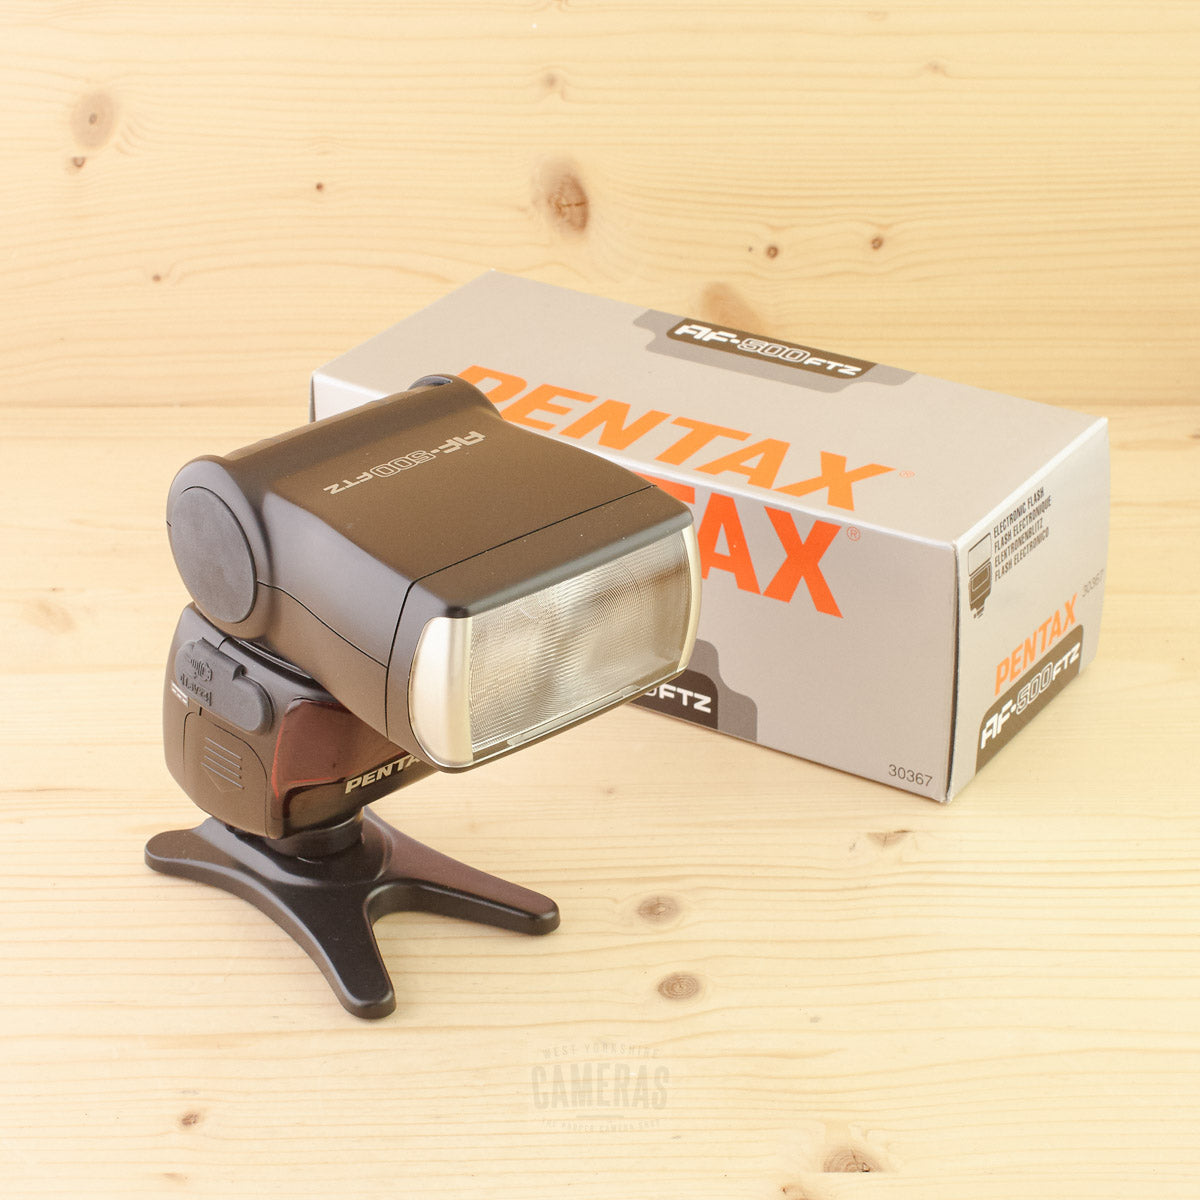 Pentax AF 500FTZ Flash Exc+ Boxed